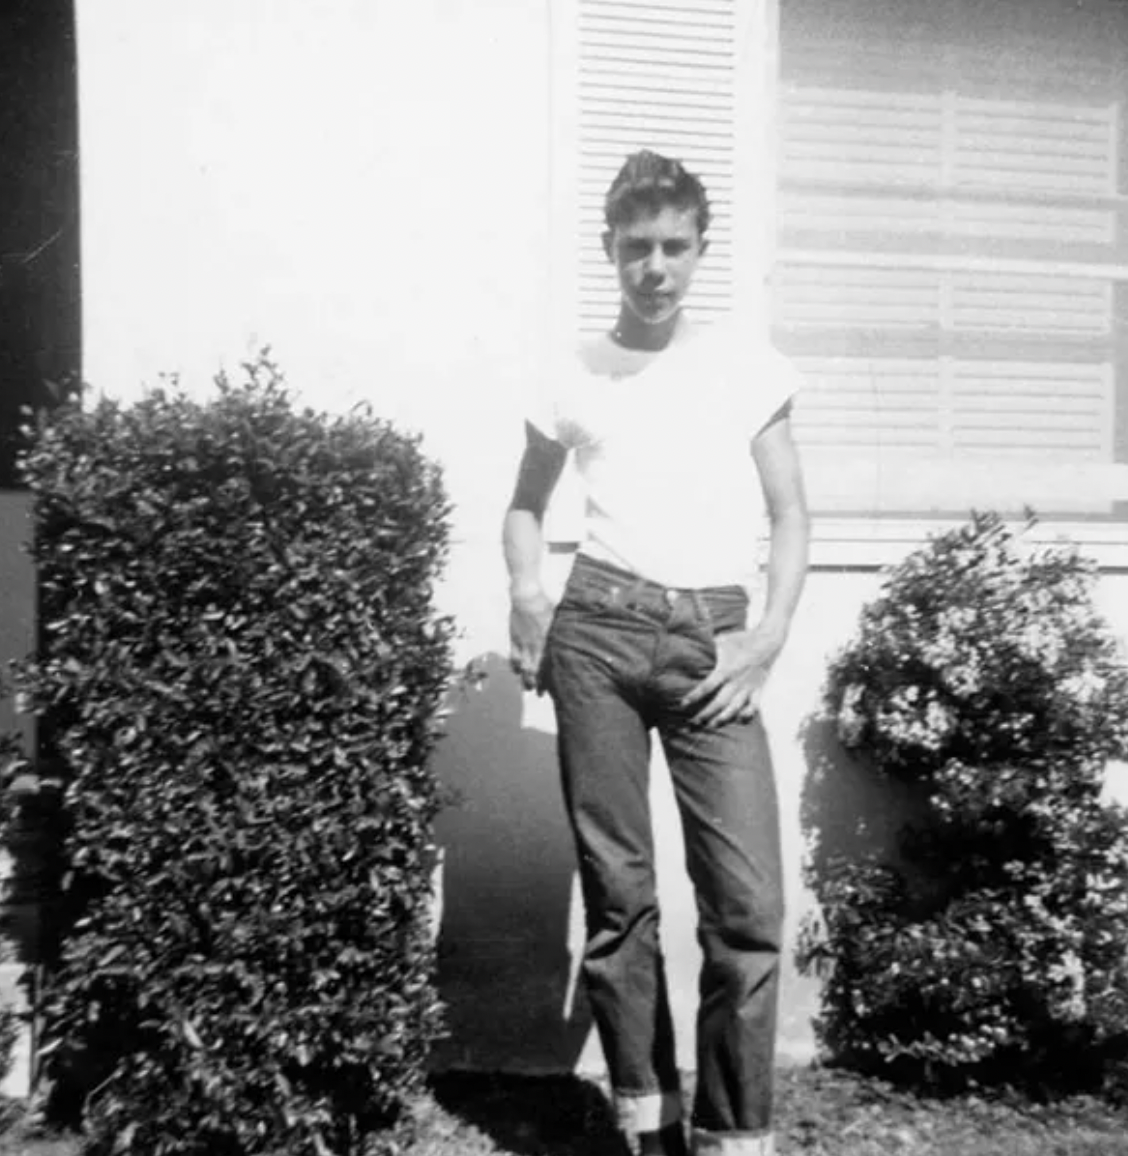 1950s cuffed jeans